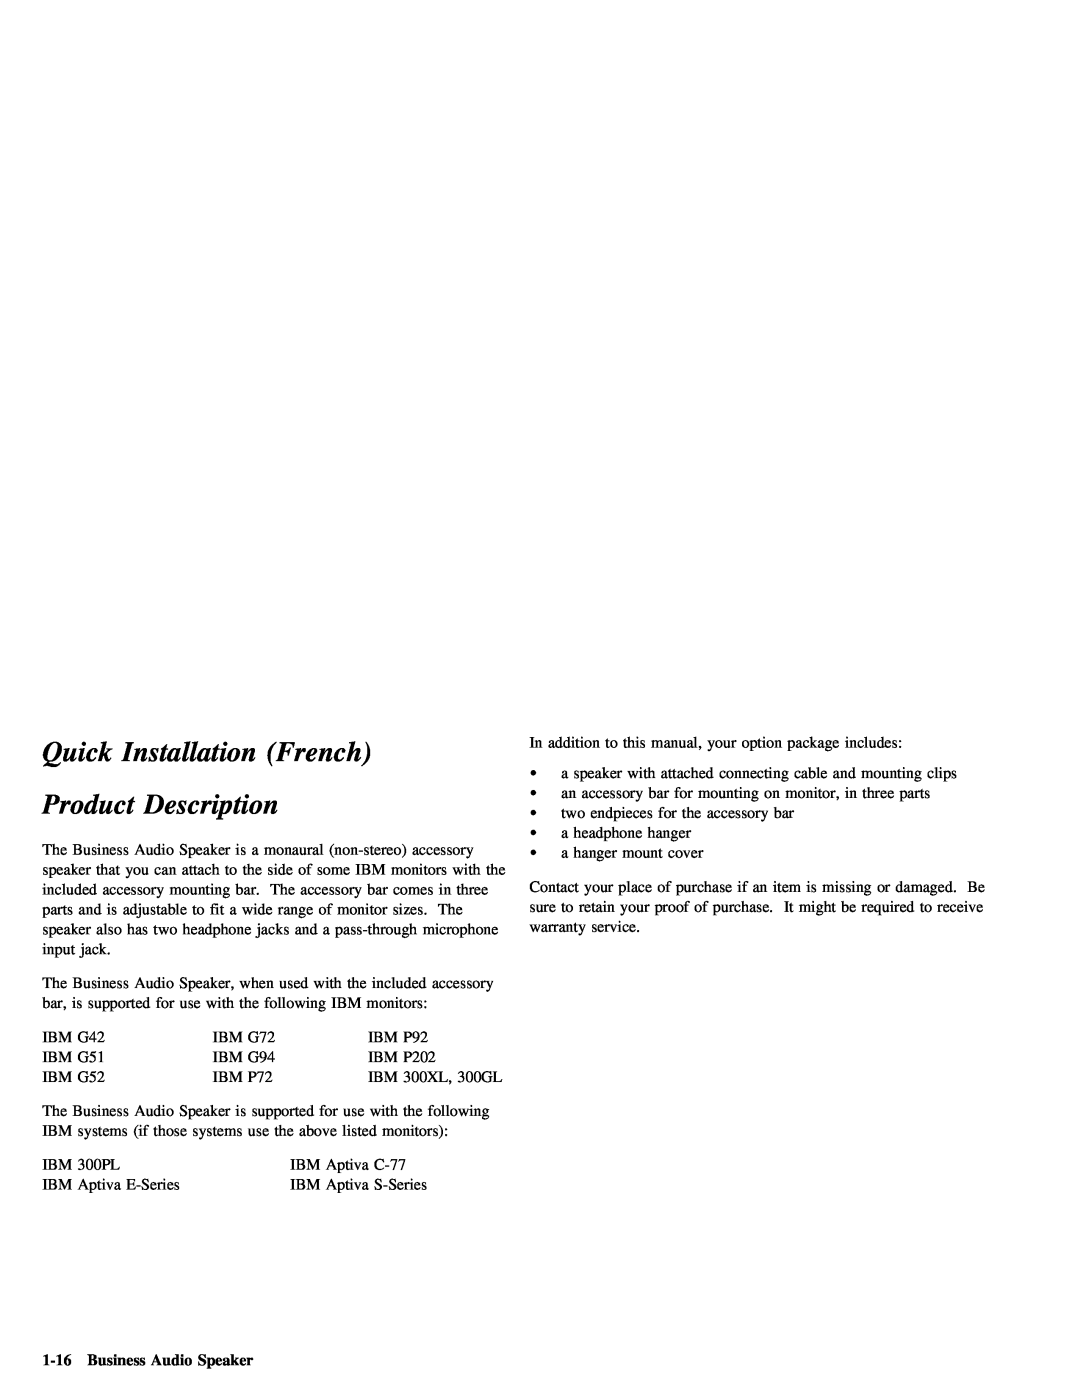 IBM 05L1596 manual Quick Installation French, 1-16Business Audio Speaker, Description, Product 